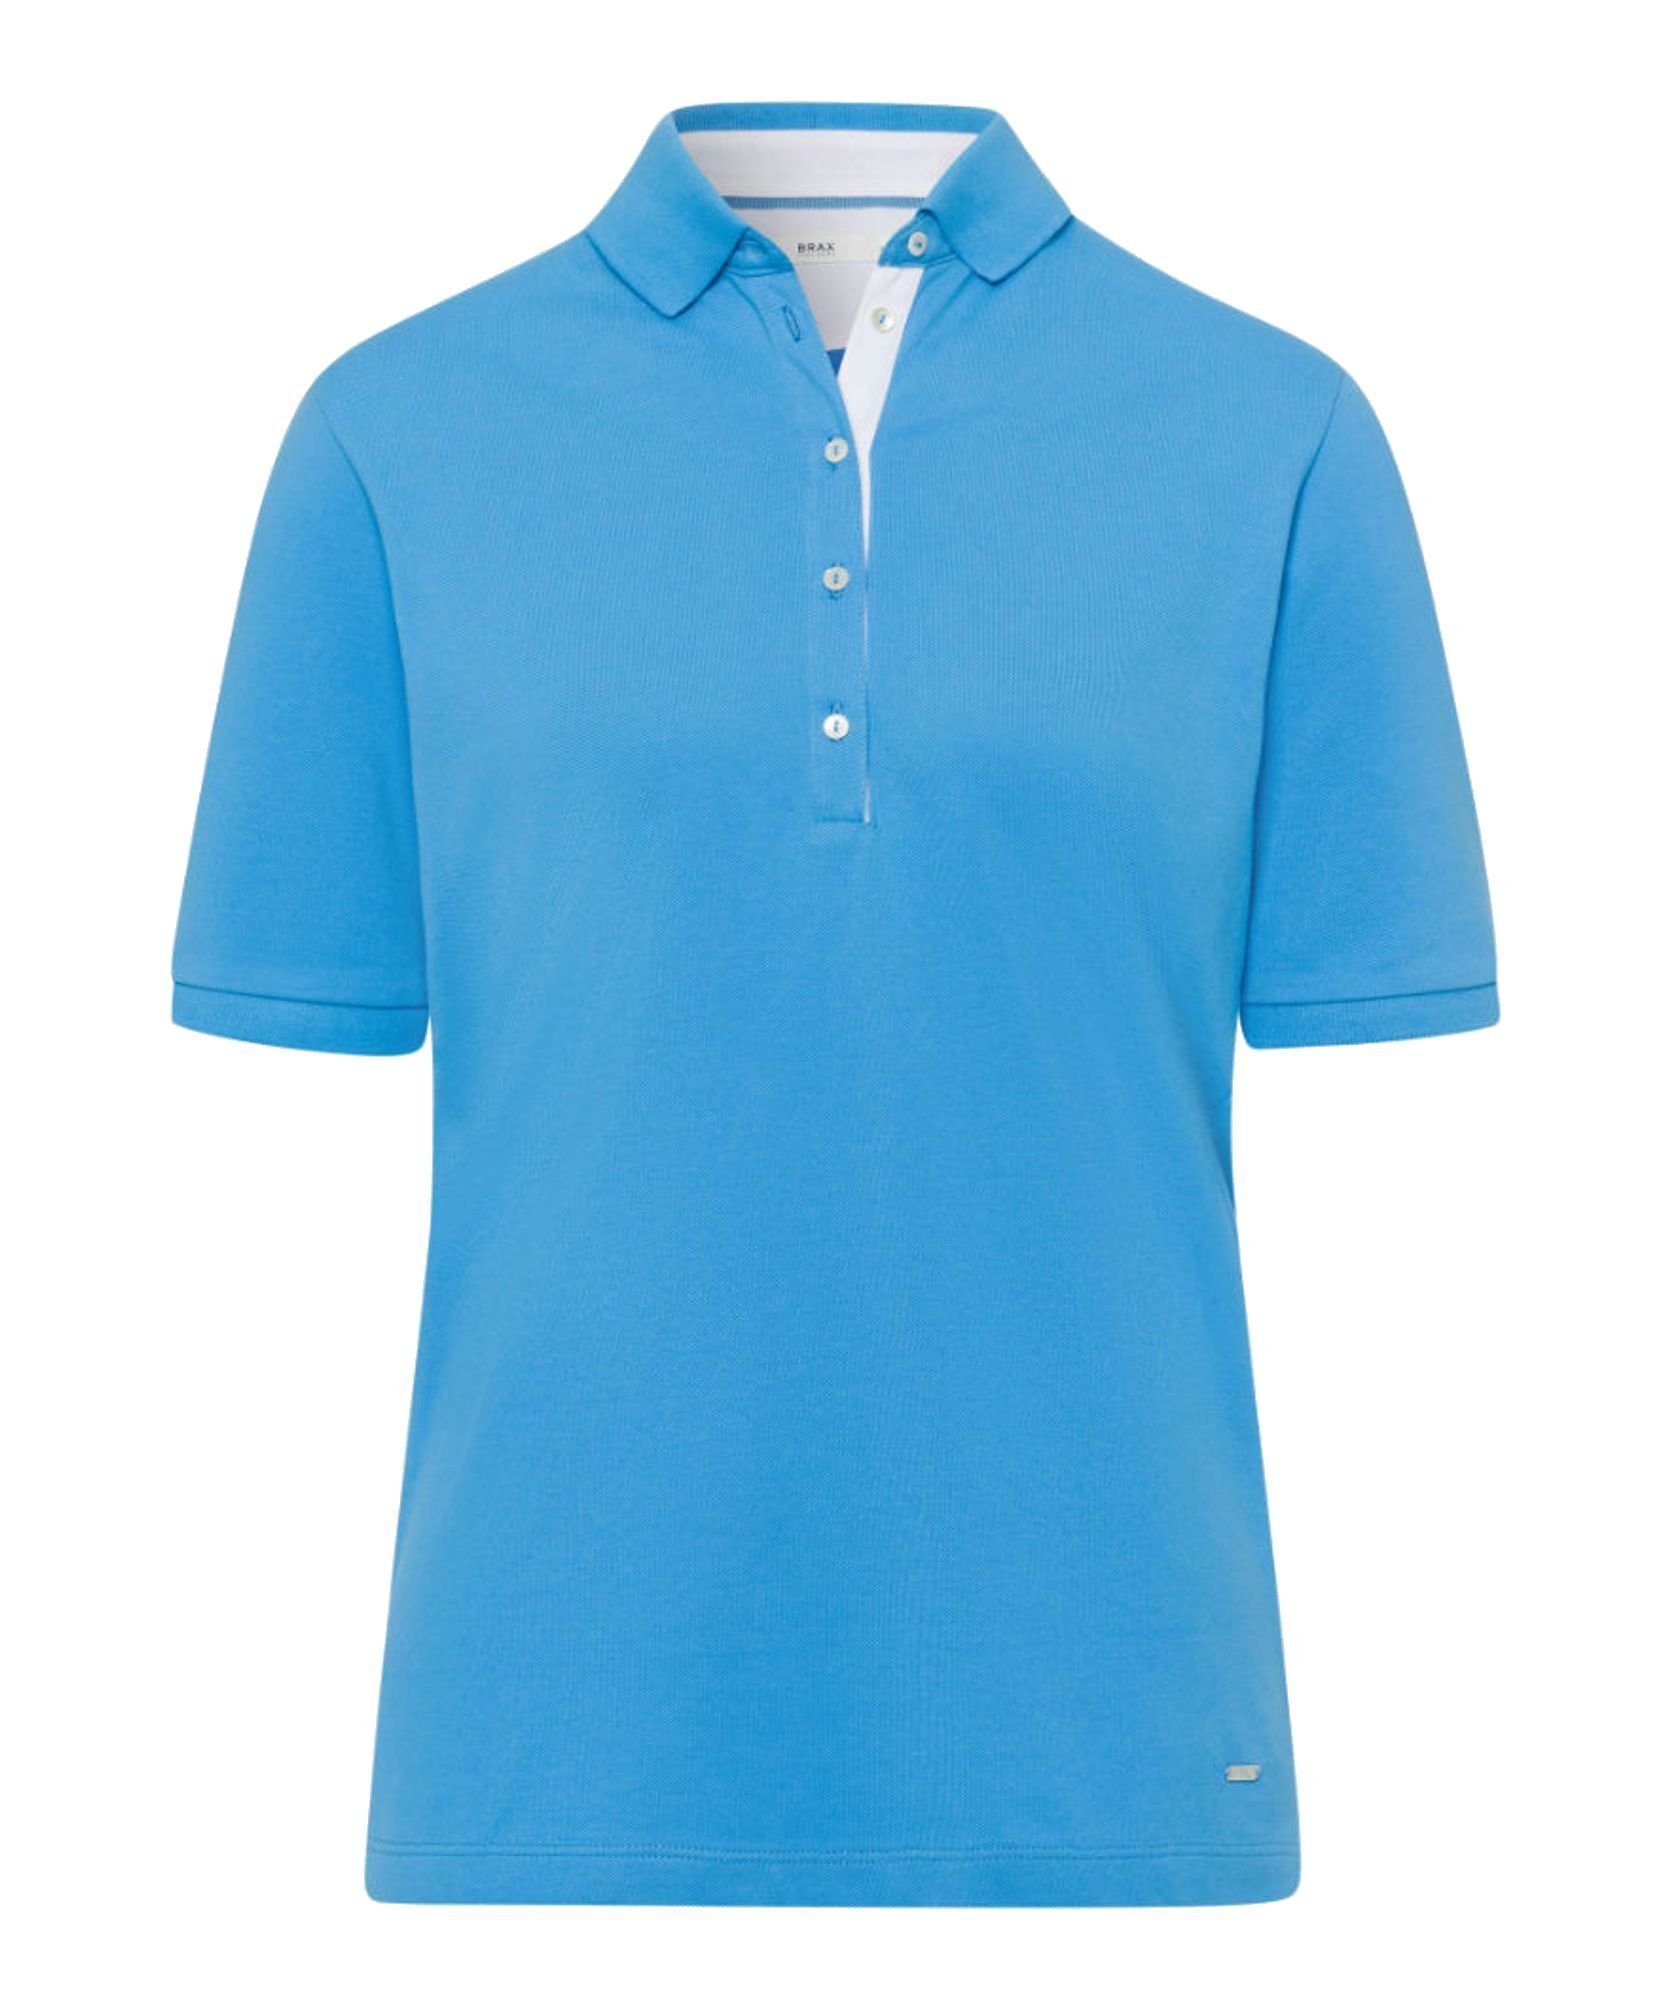 (27) Modern-sportive Brax 32-3308 Santorin Optik T-Shirt